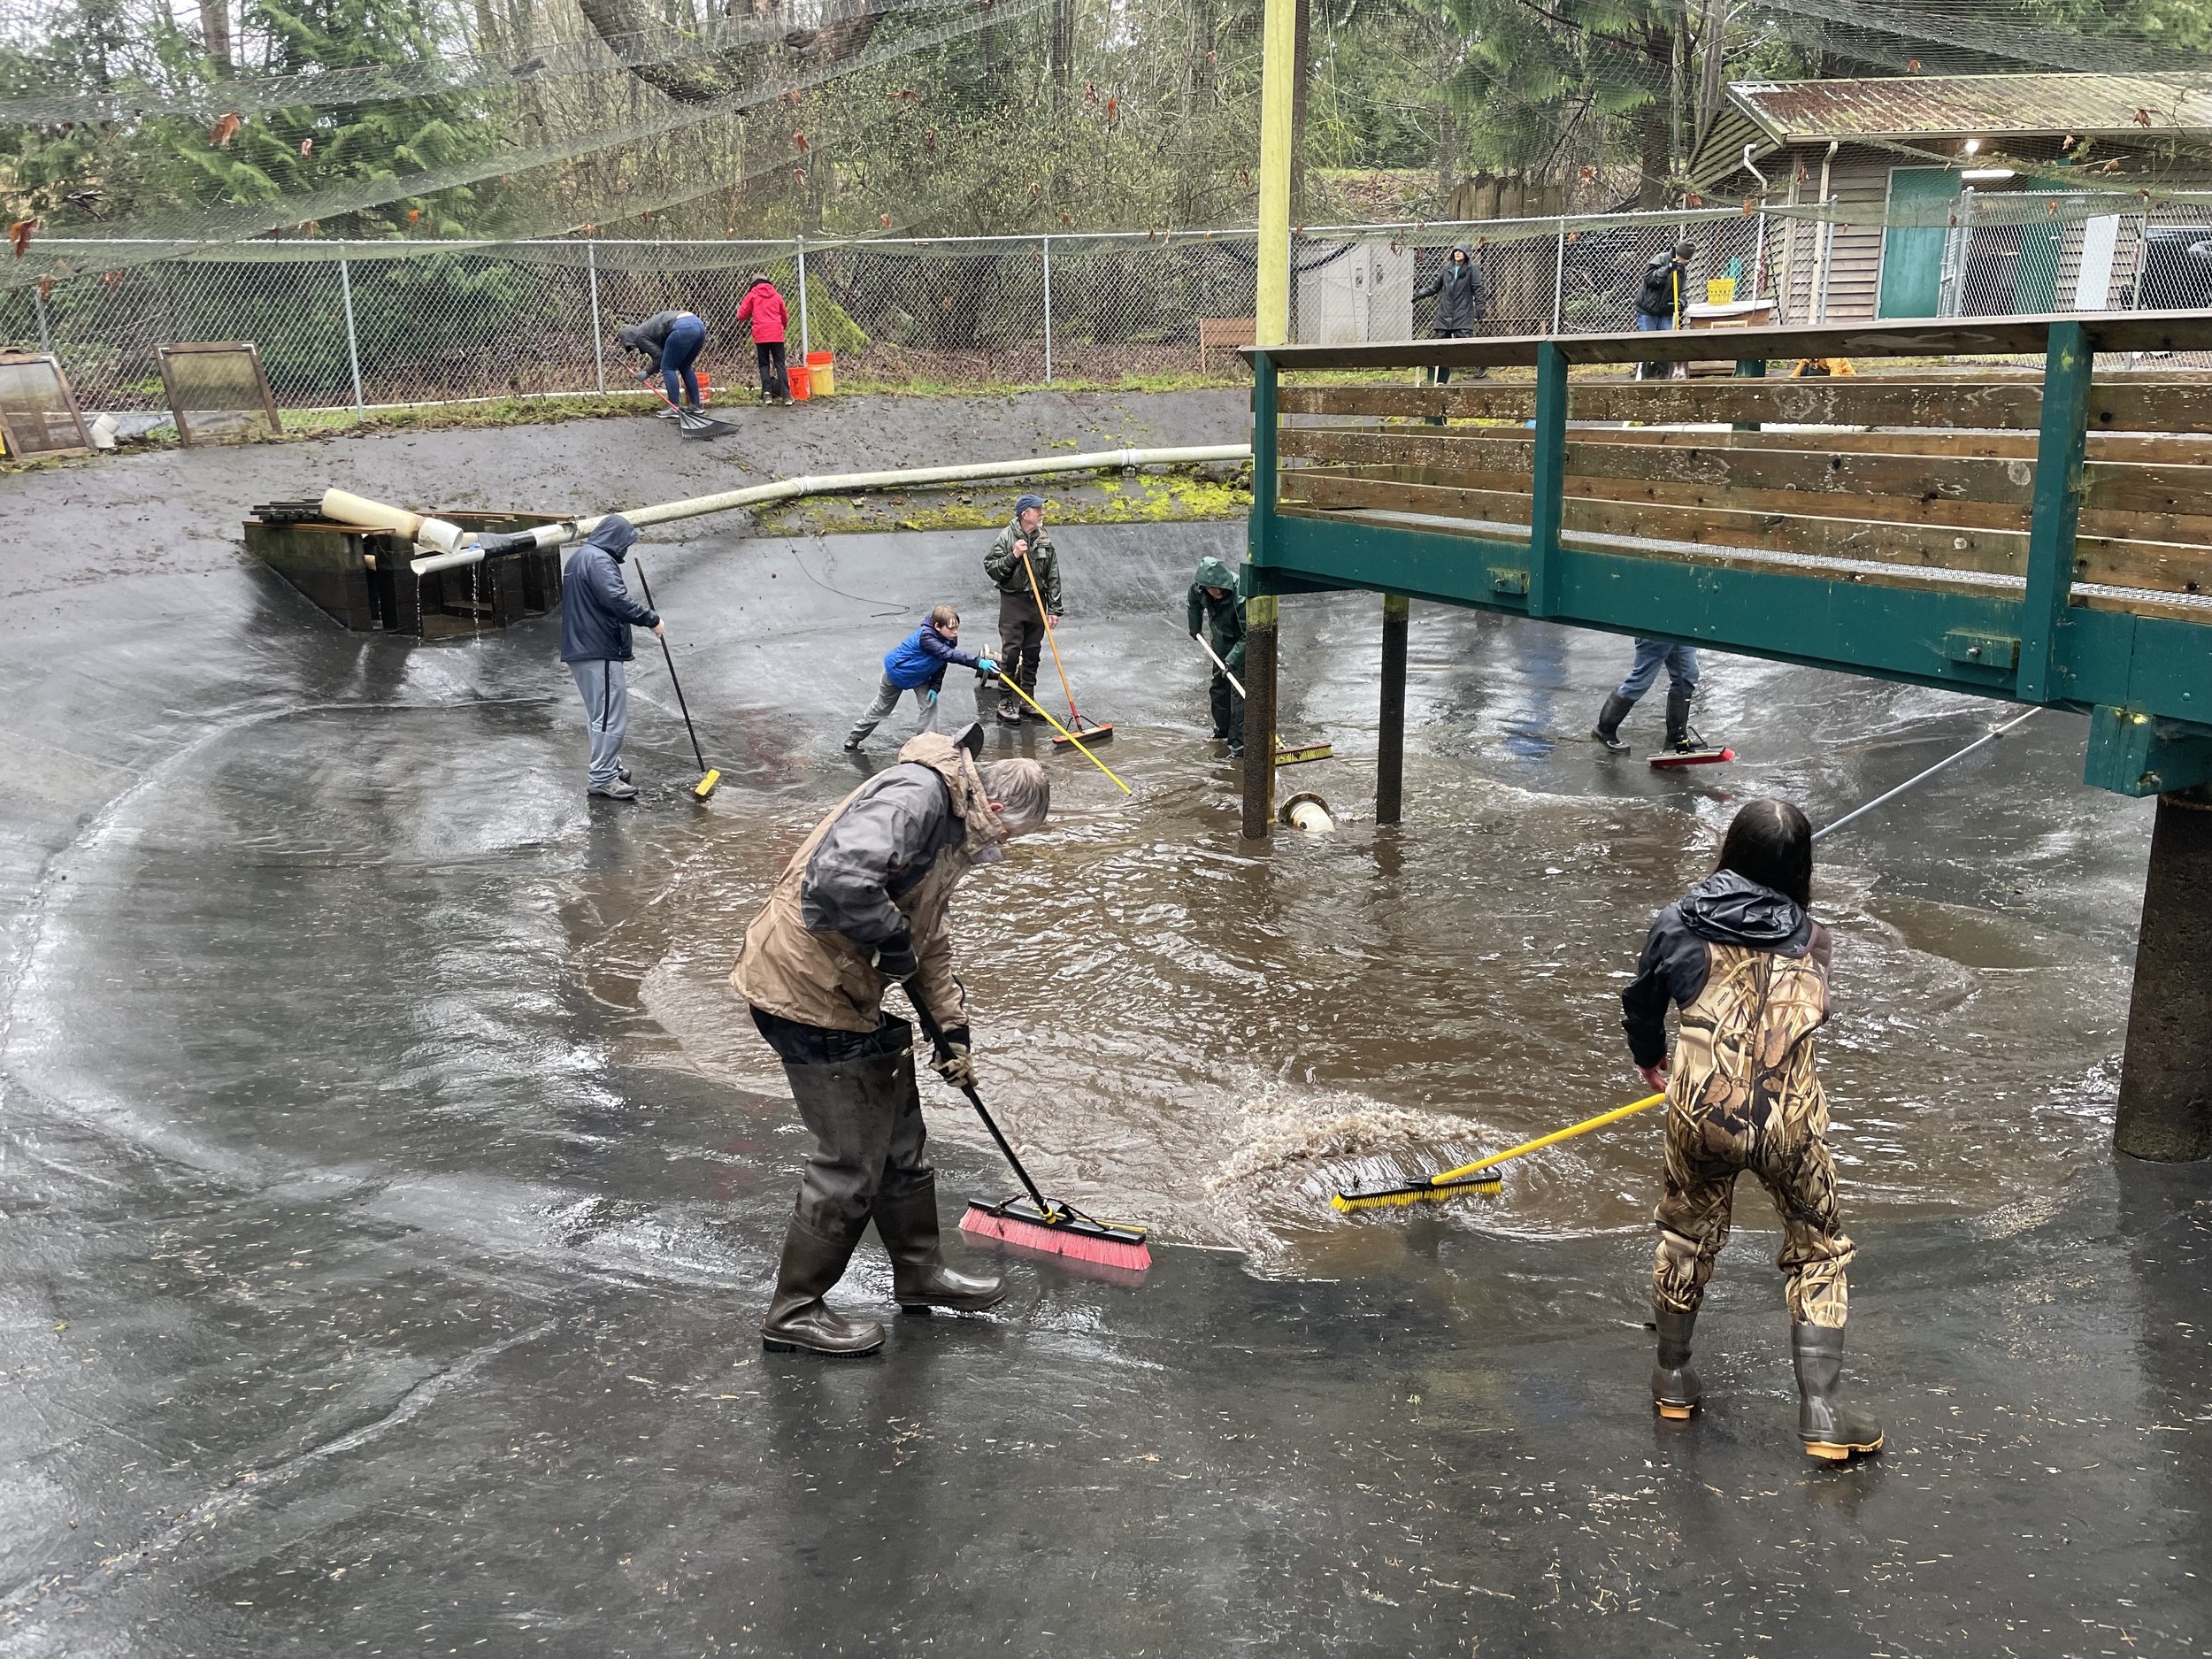 Volunteers helping to clean the pond